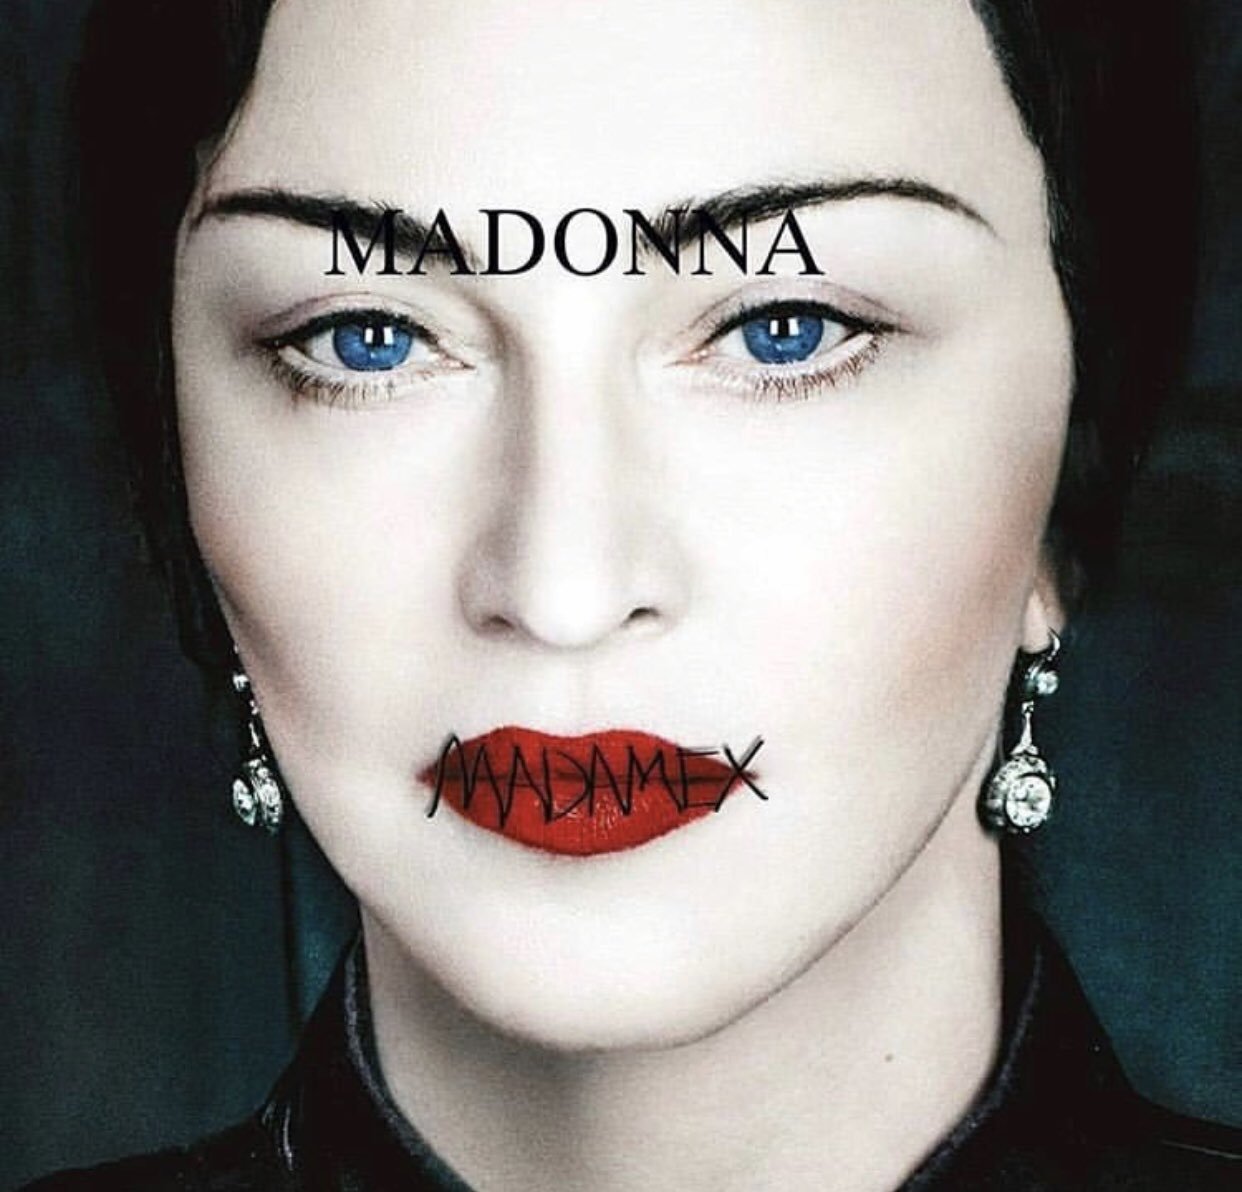 Madonna >> álbum "Madame X" - Página 9 D4TpC-7W0AA4Hvk.jpg.c1bc9dff7e10d18139e8c622a8e0e61e